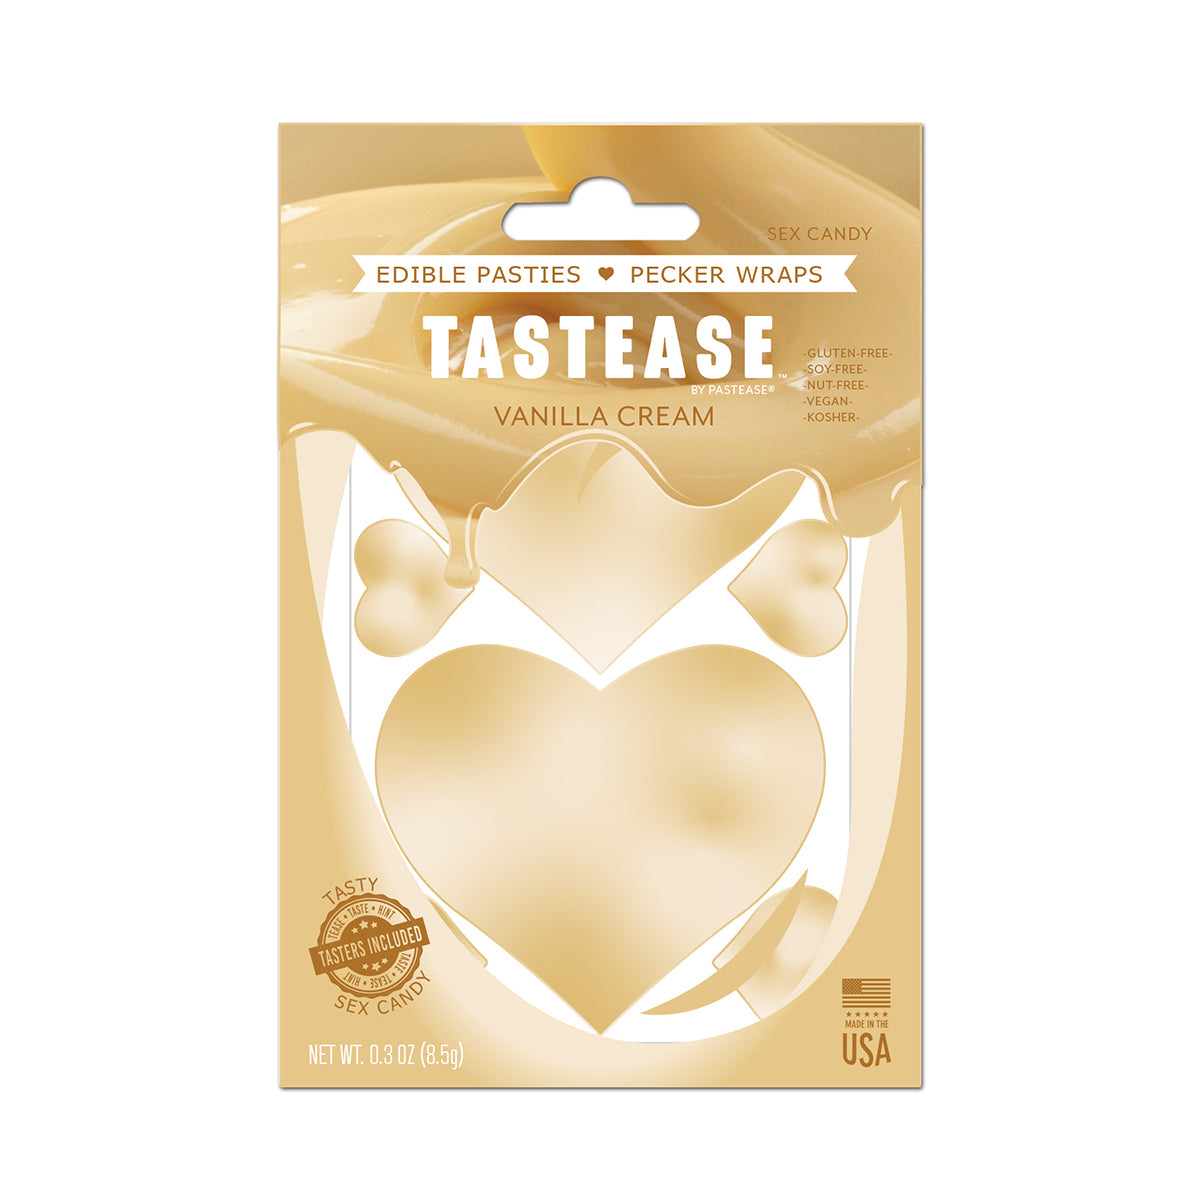 Tastease by Pastease Sweet Cream Candy Edible Pasties & Pecker Wraps - Zateo Joy